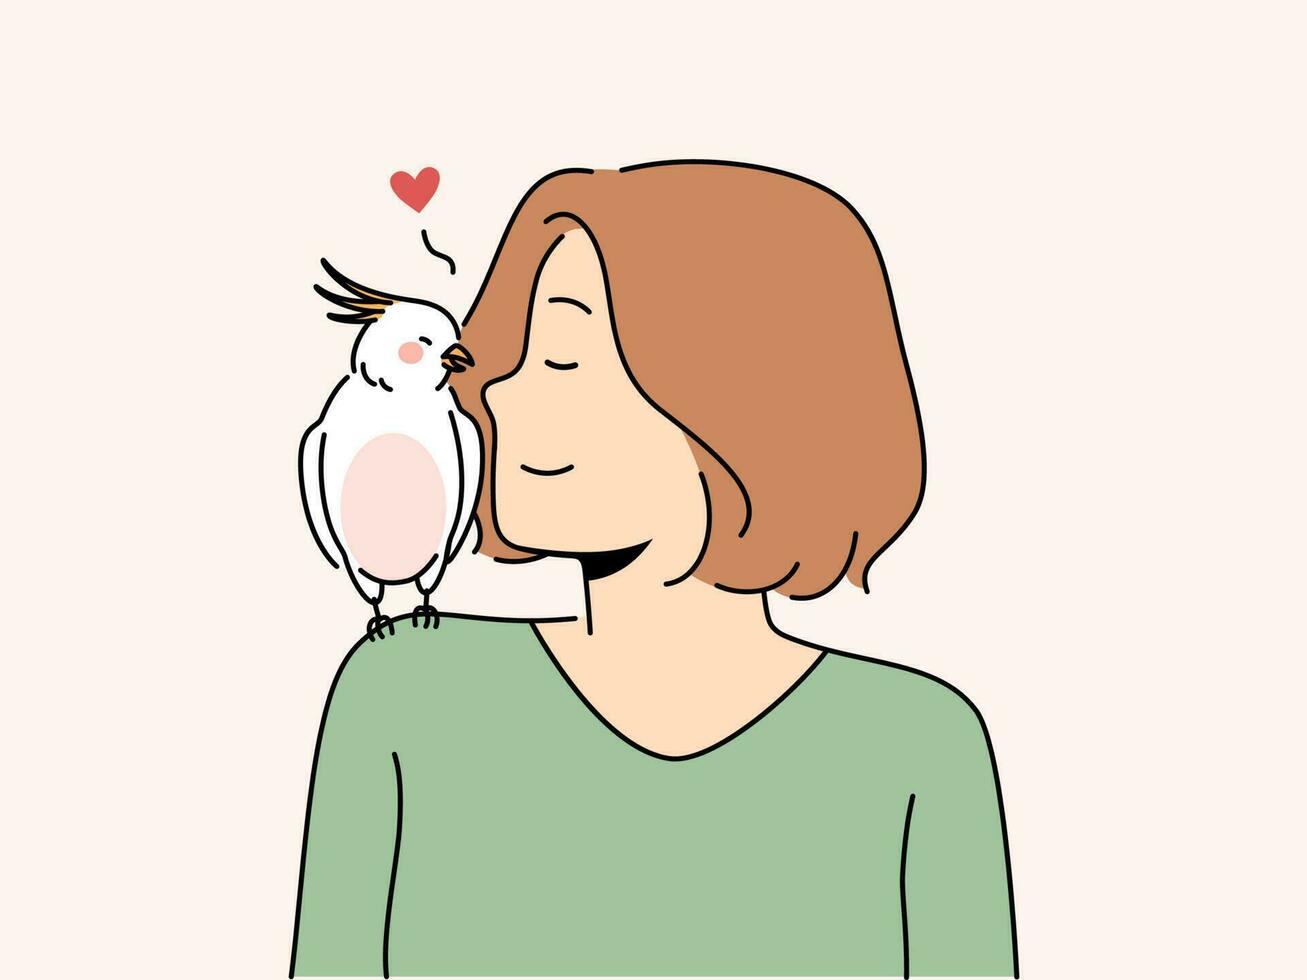 contento mujer con loro sentado en hombro. sonriente niña hablar abrazo con exótico pájaro. ornitología concepto. vector ilustración.